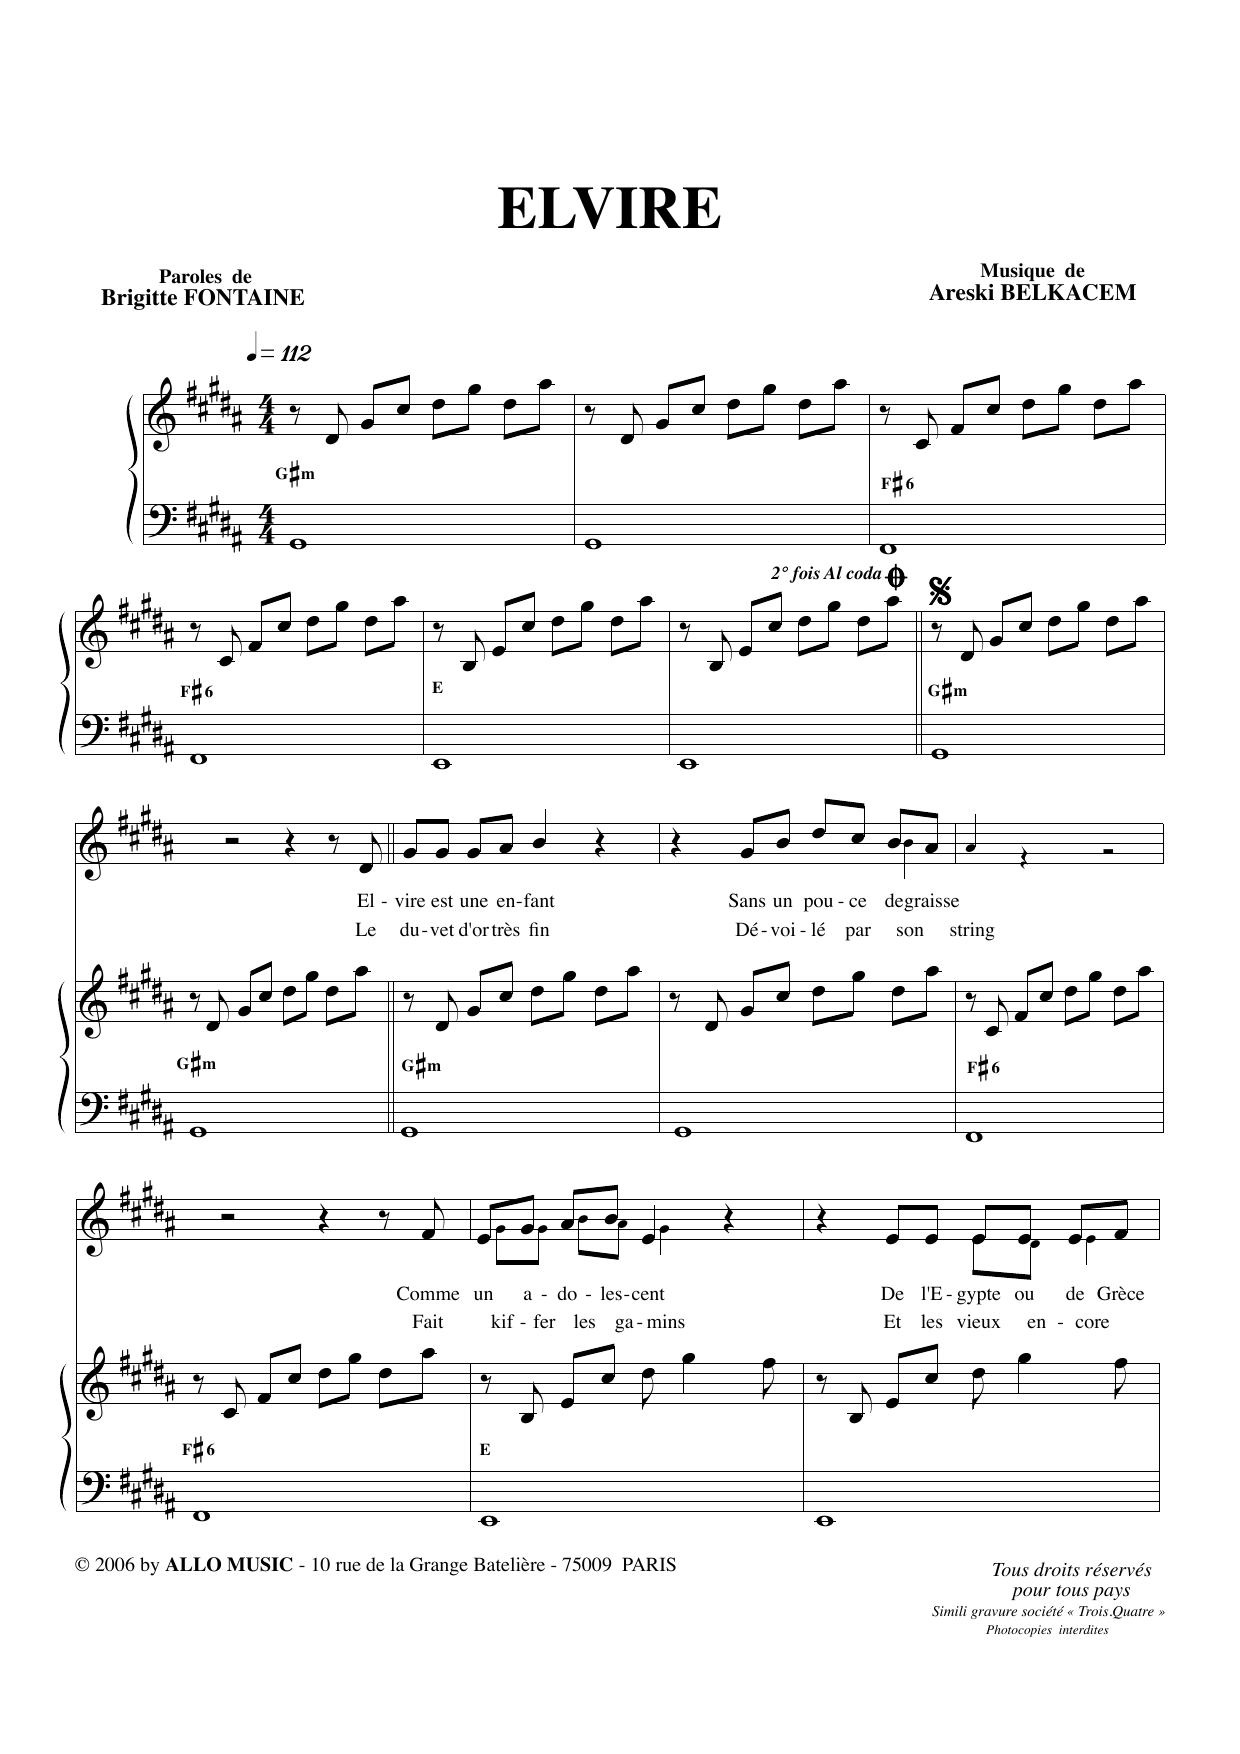 Brigitte Fontaine & Areski Belkacem Elvire Sheet Music Notes & Chords for Piano & Vocal - Download or Print PDF